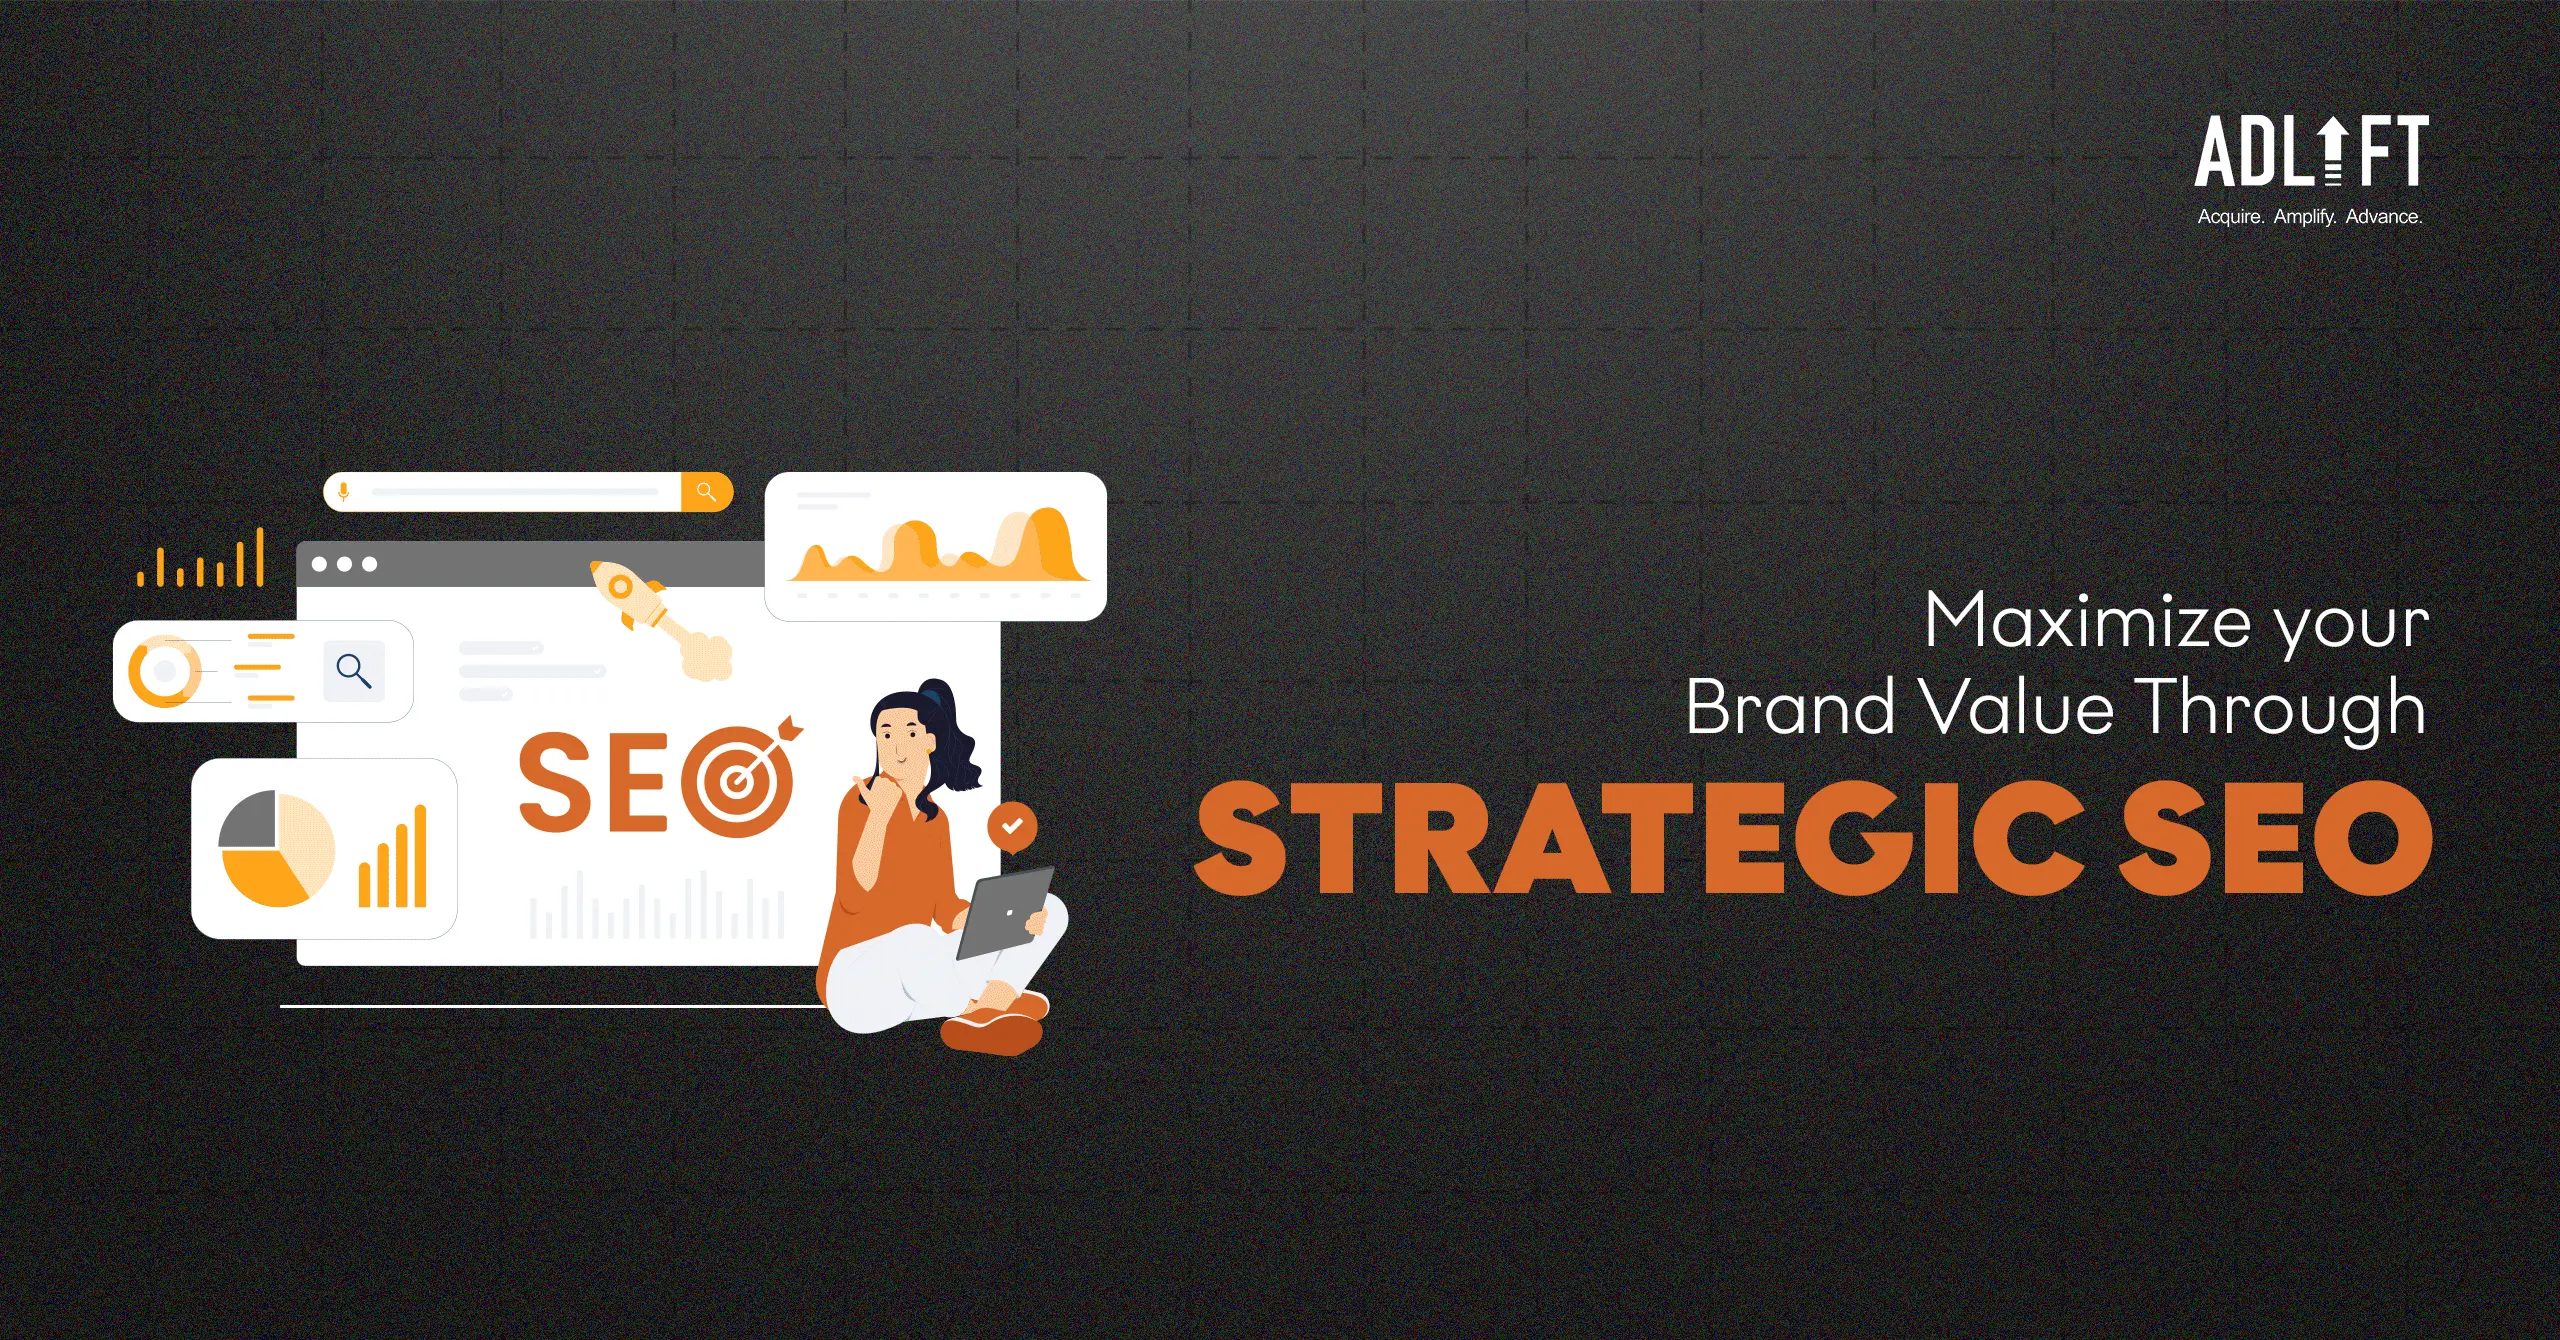 Maximize your Brand Value Through Strategic SEO